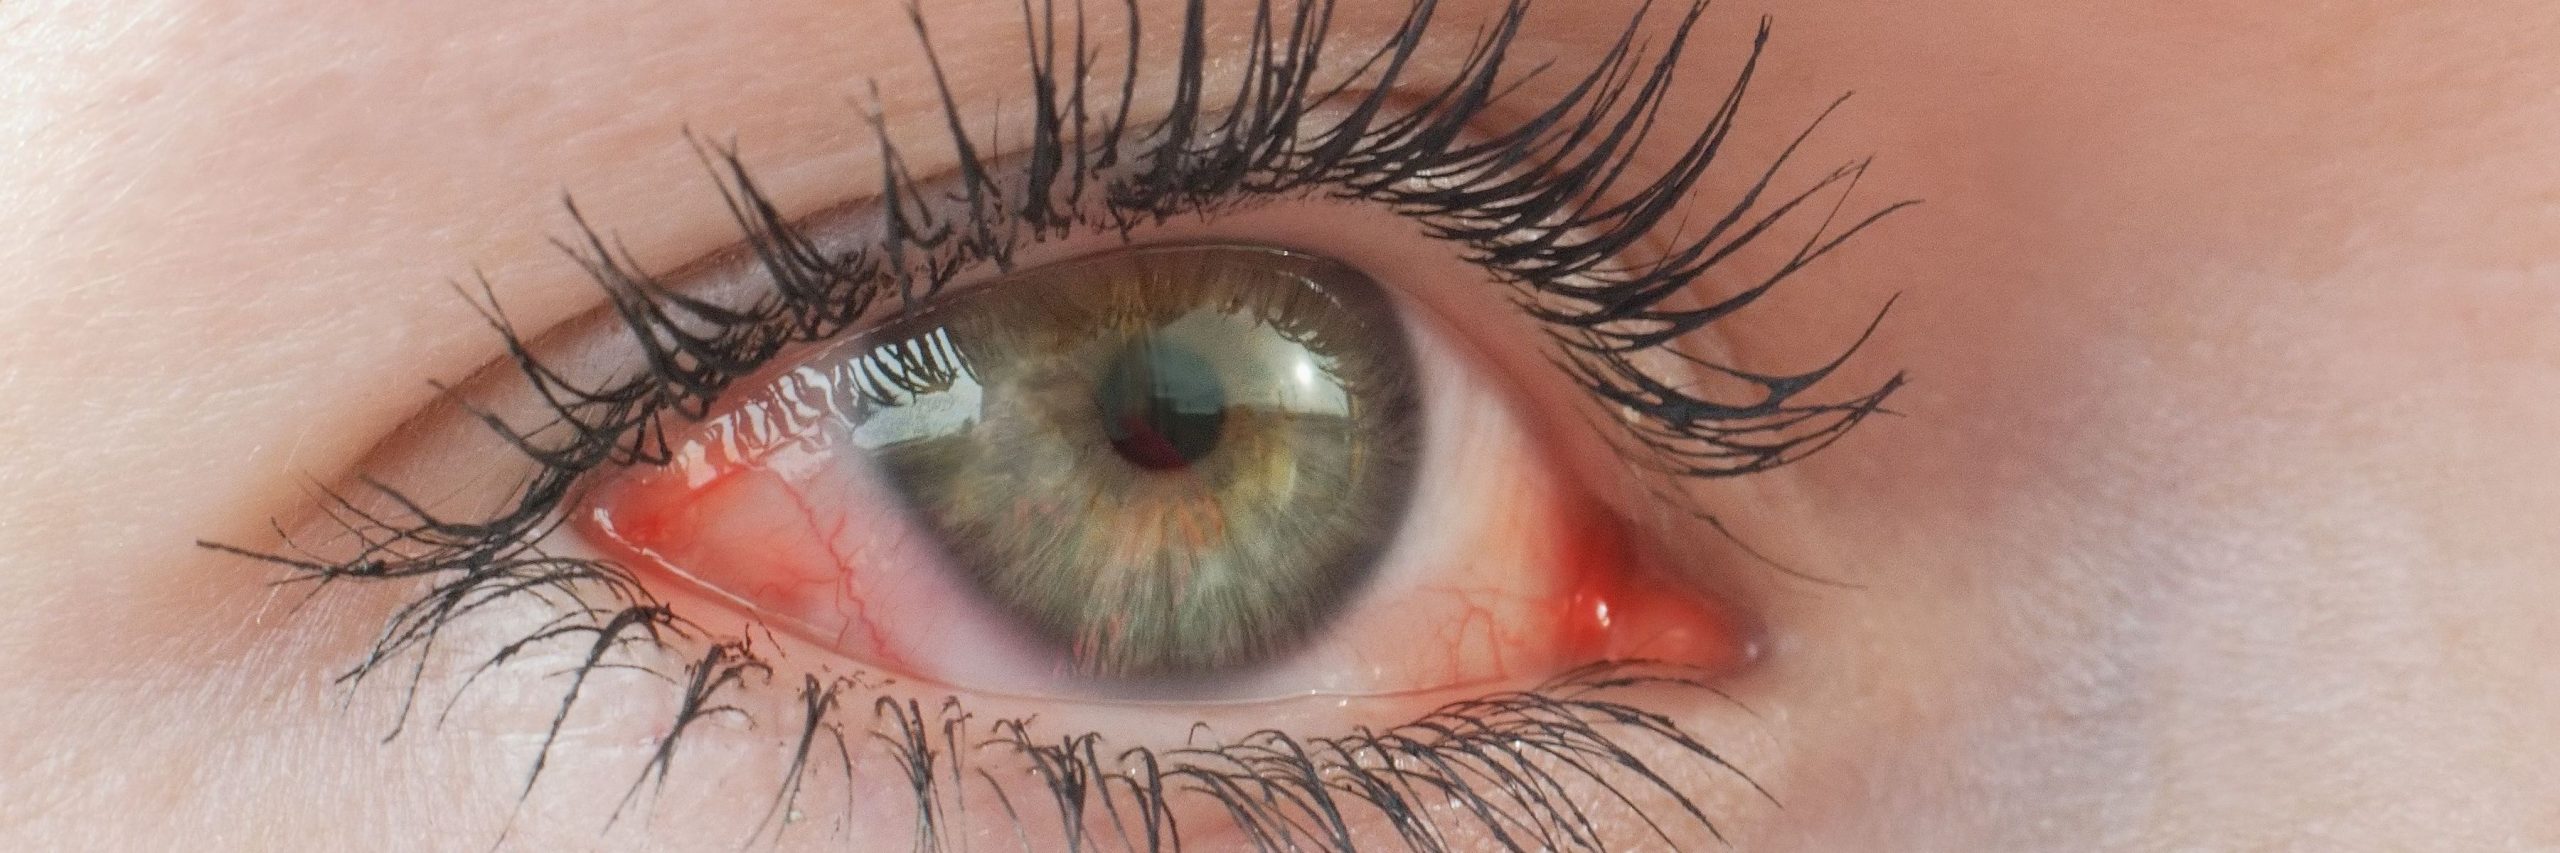 Inflammatory Markers in Tear Fluids Predict Dupilumab-Associated Ocular Surface Disease